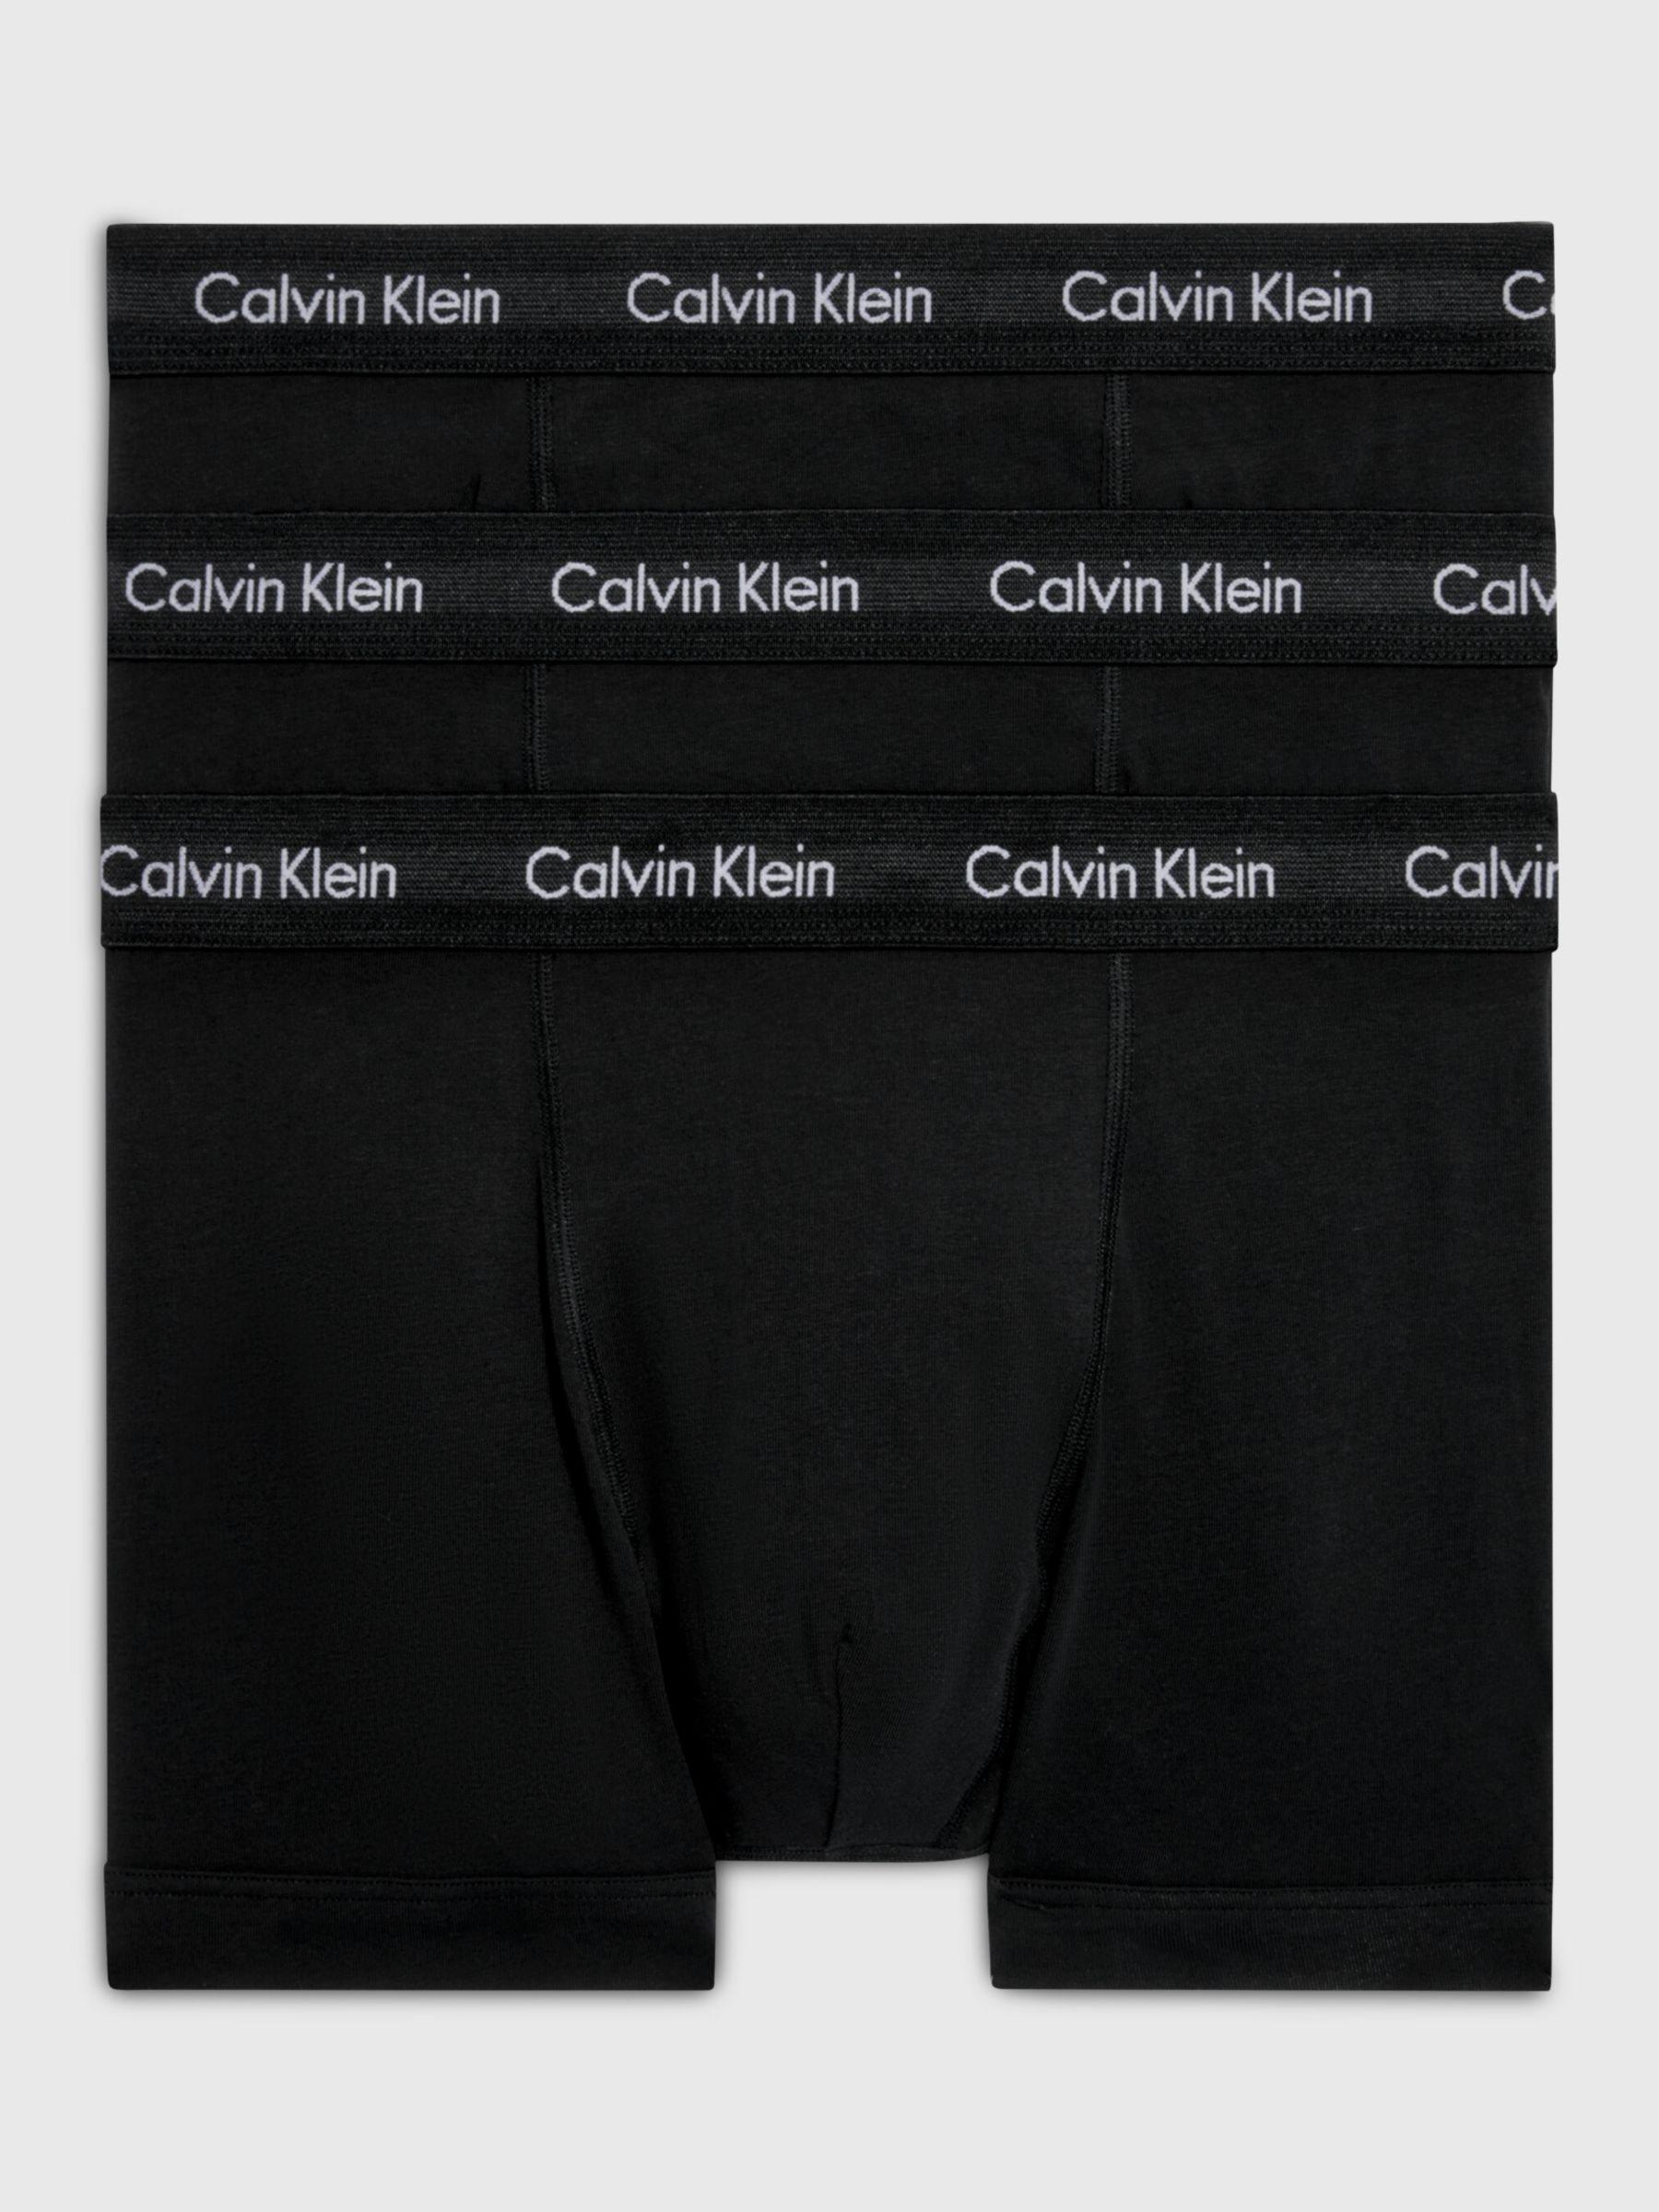 Calvin Klein Regular Cotton Stretch Trunks, Pack of 3, Black